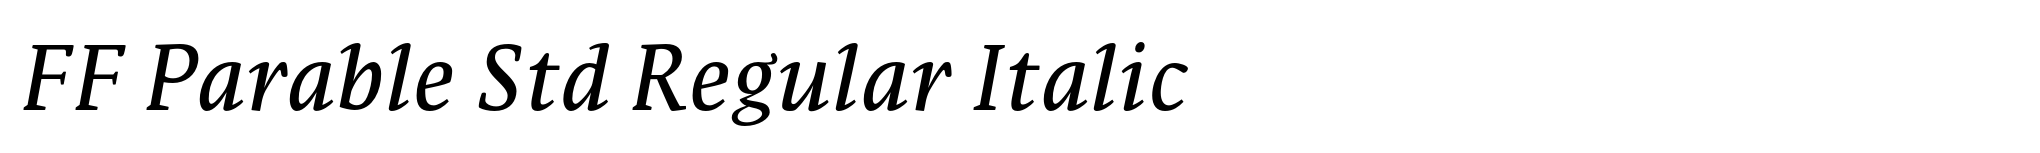 FF Parable Std Regular Italic image